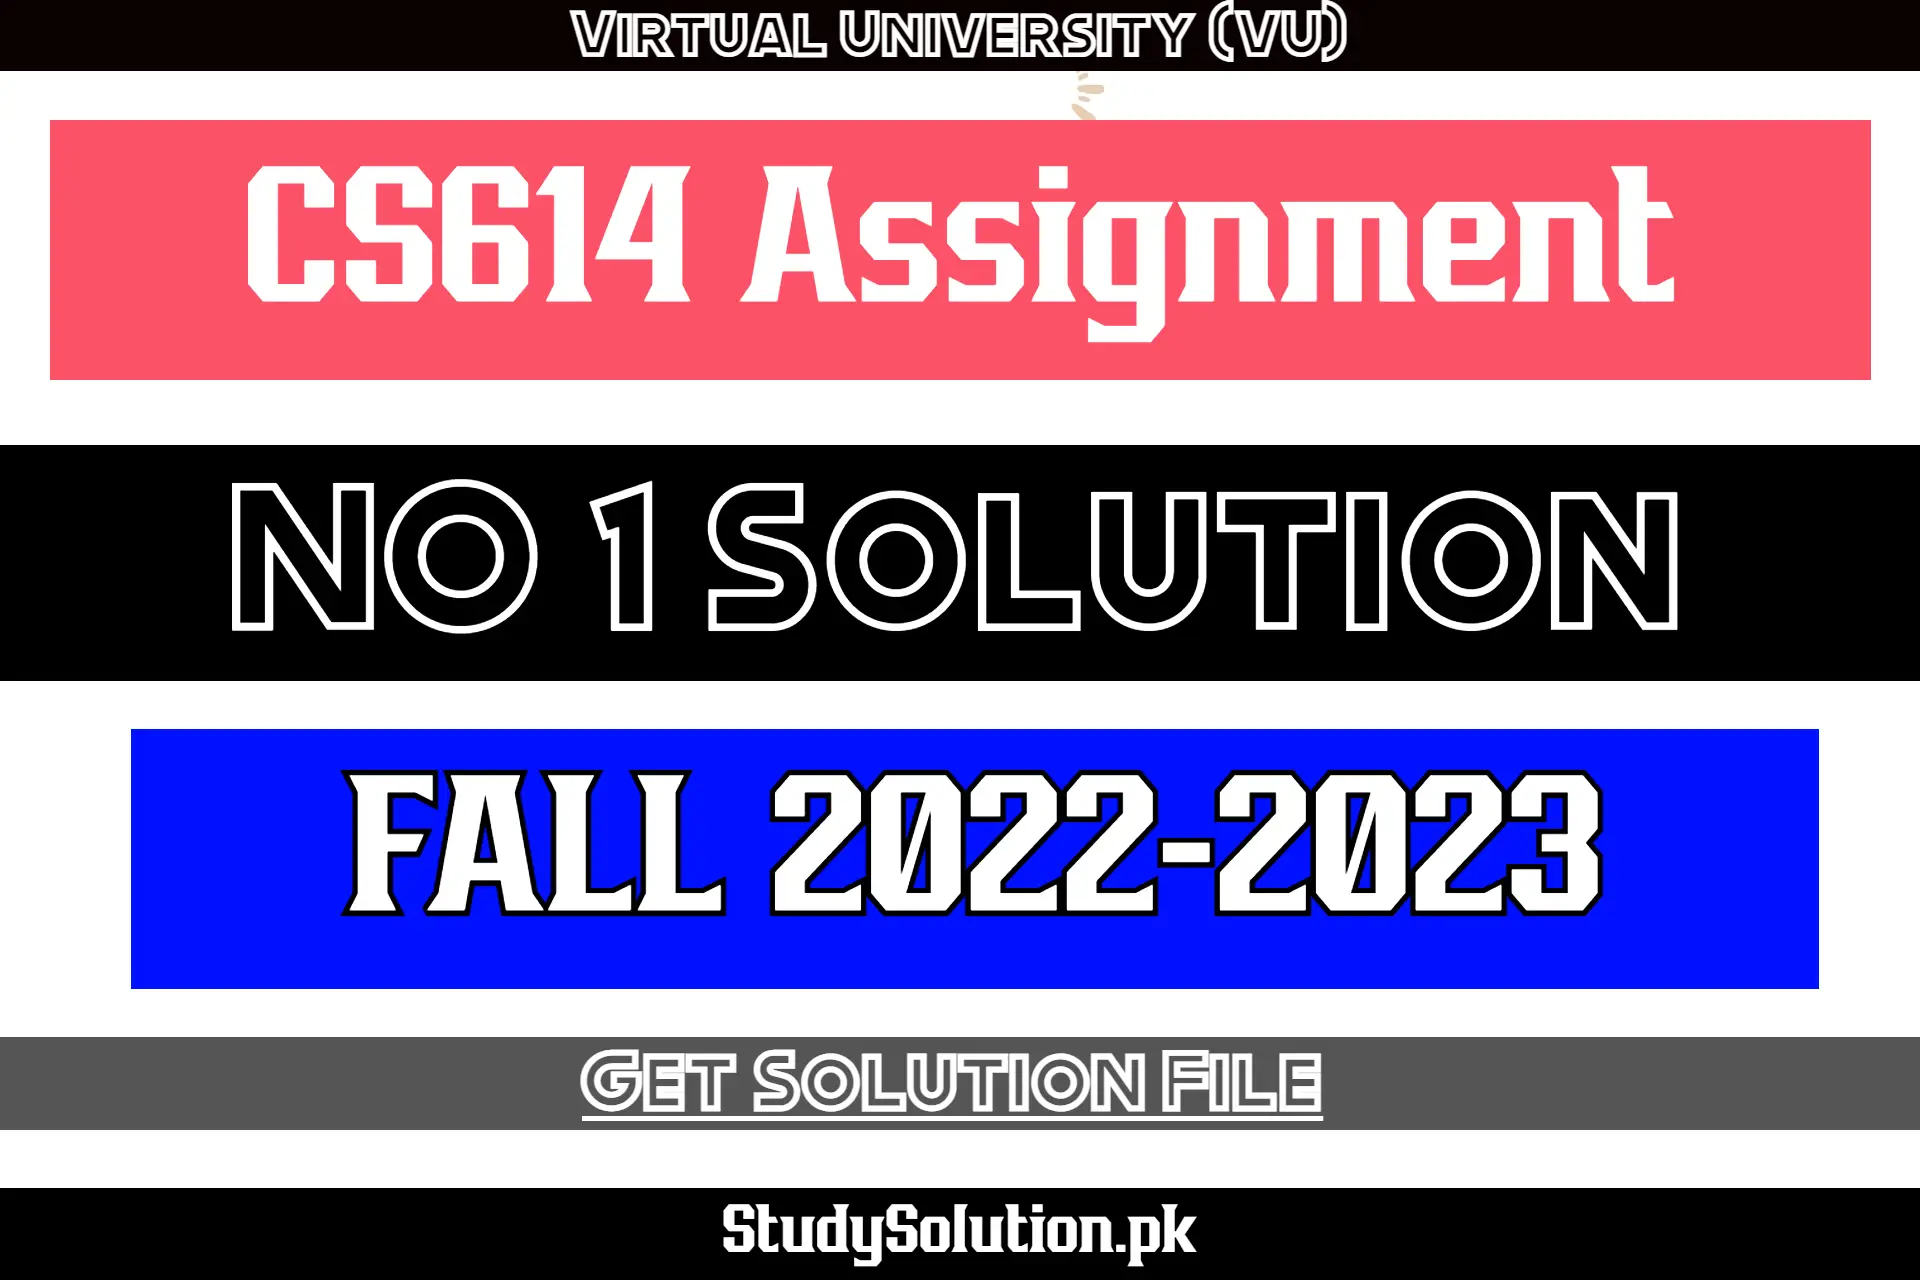 CS614 Assignment No 1 Solution Fall 2022